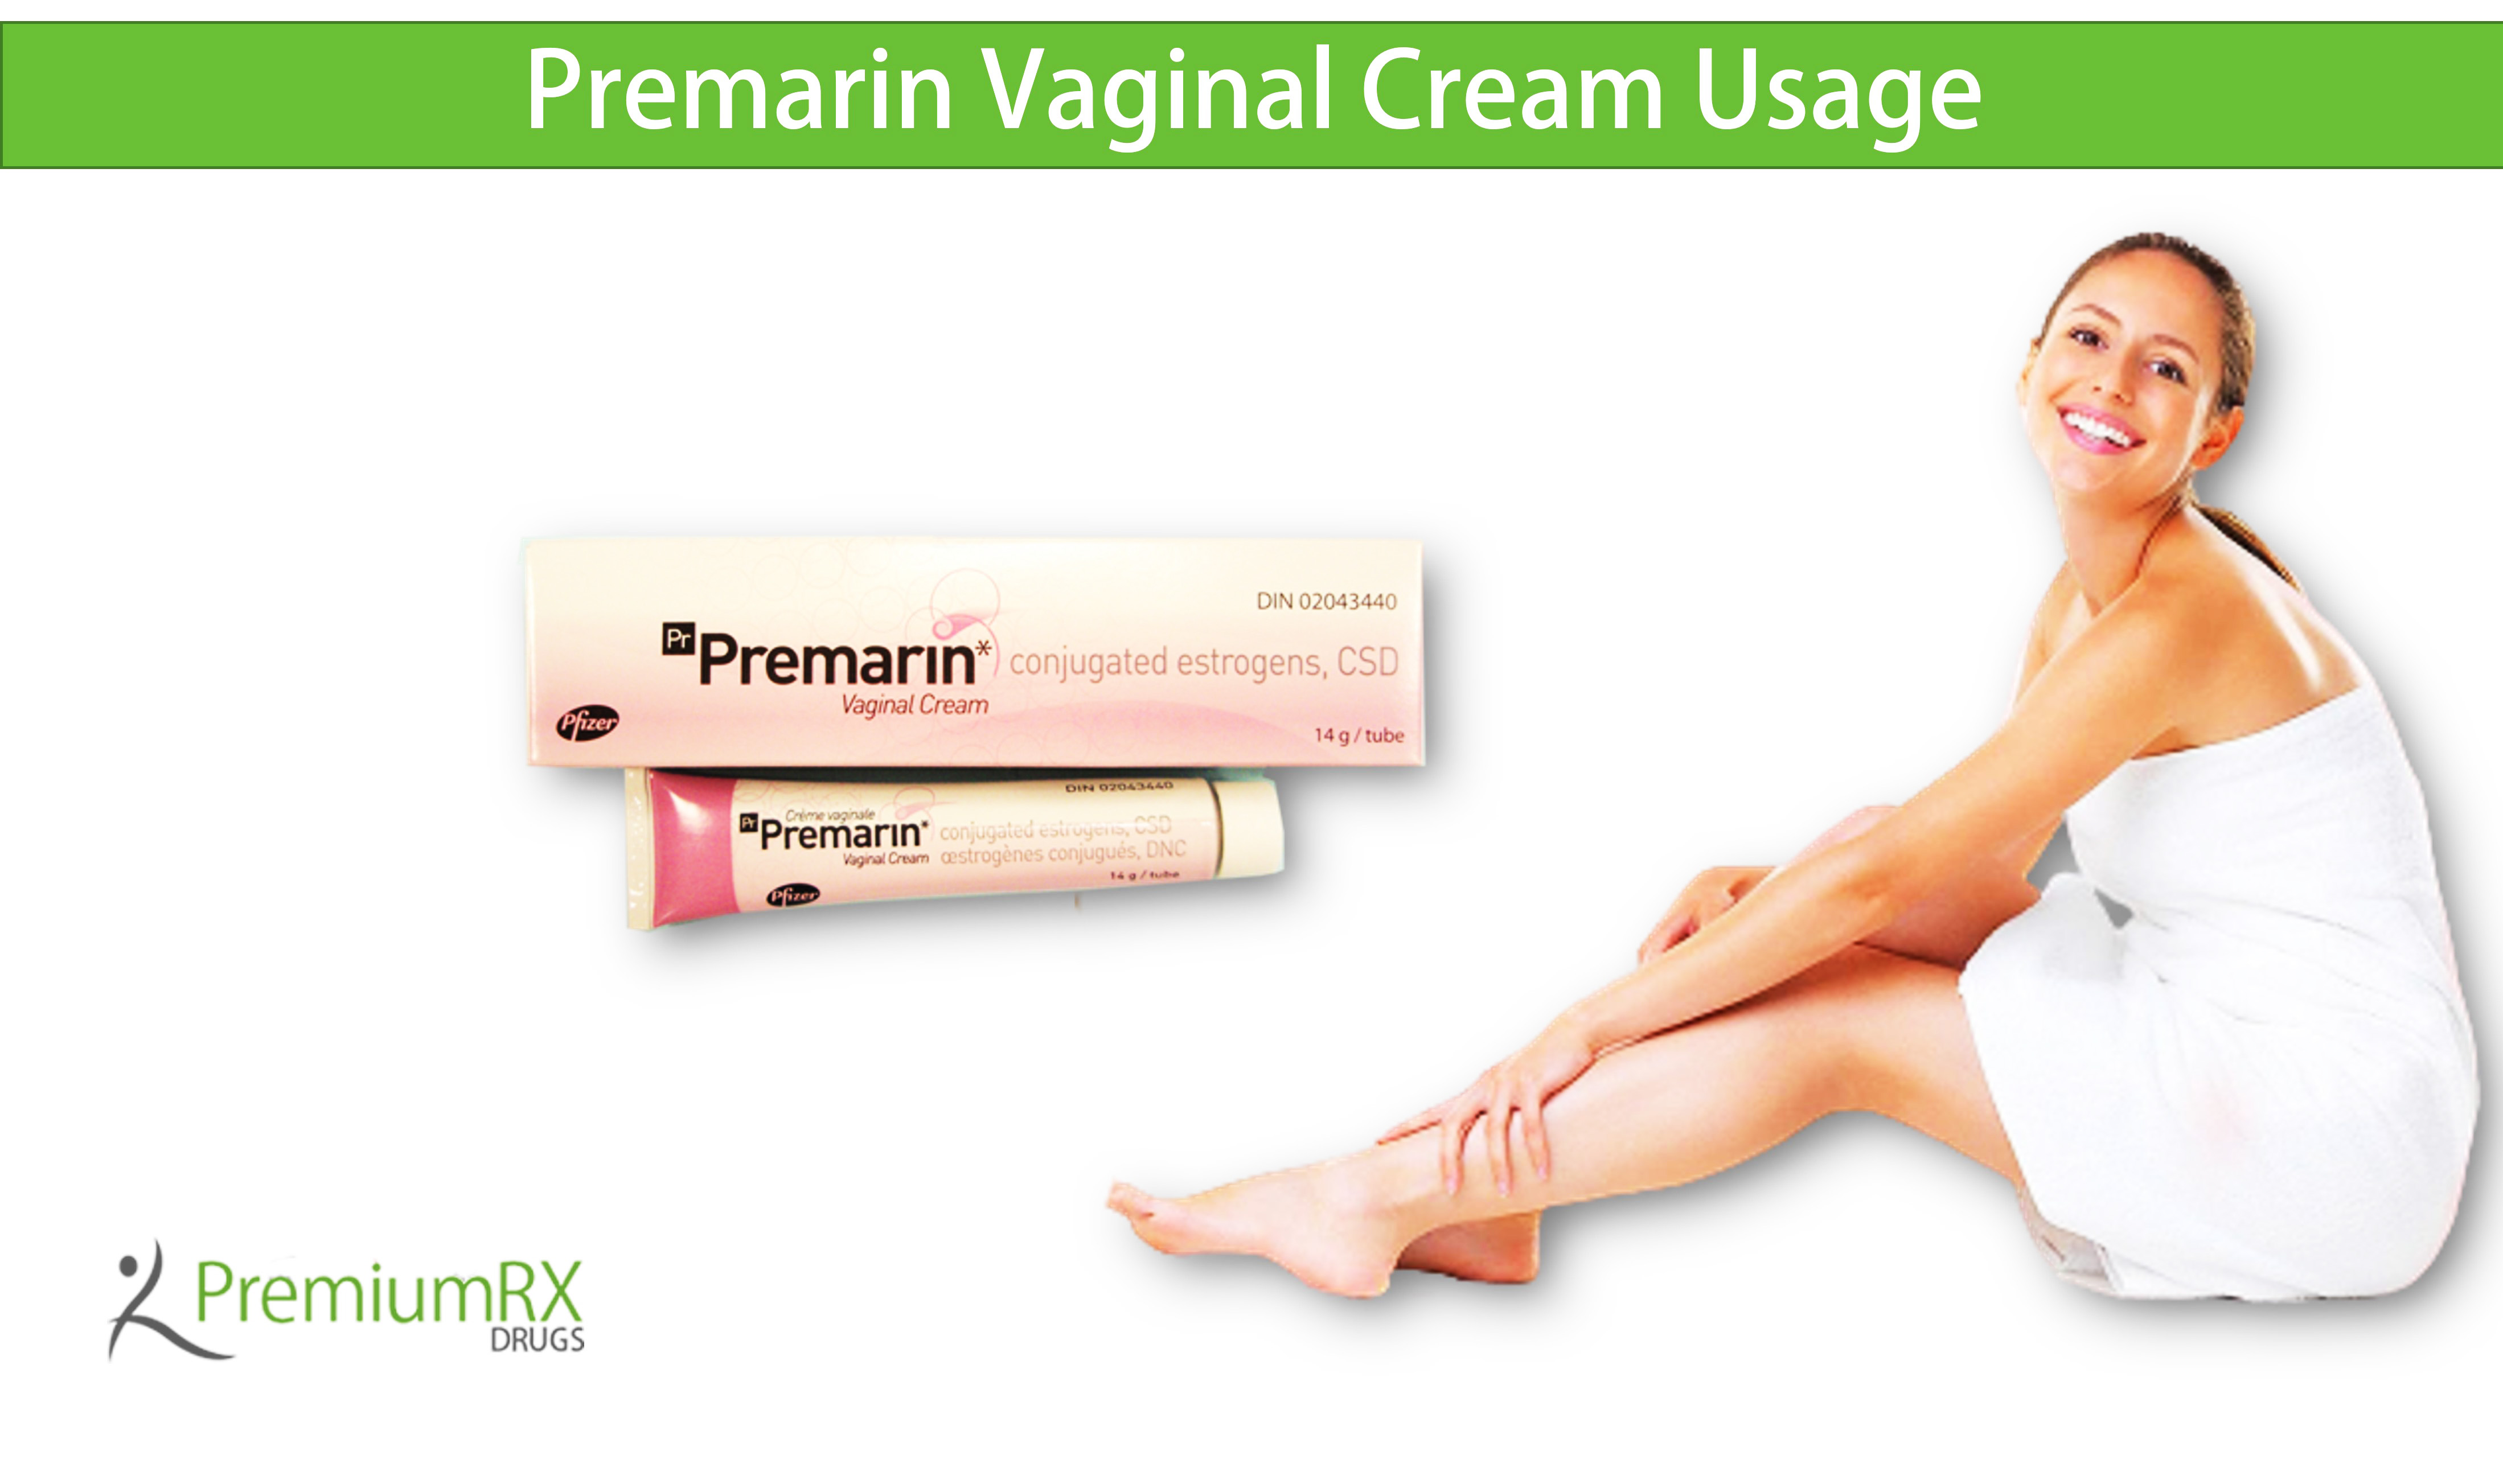 Premarin Vaginal Cream Usage